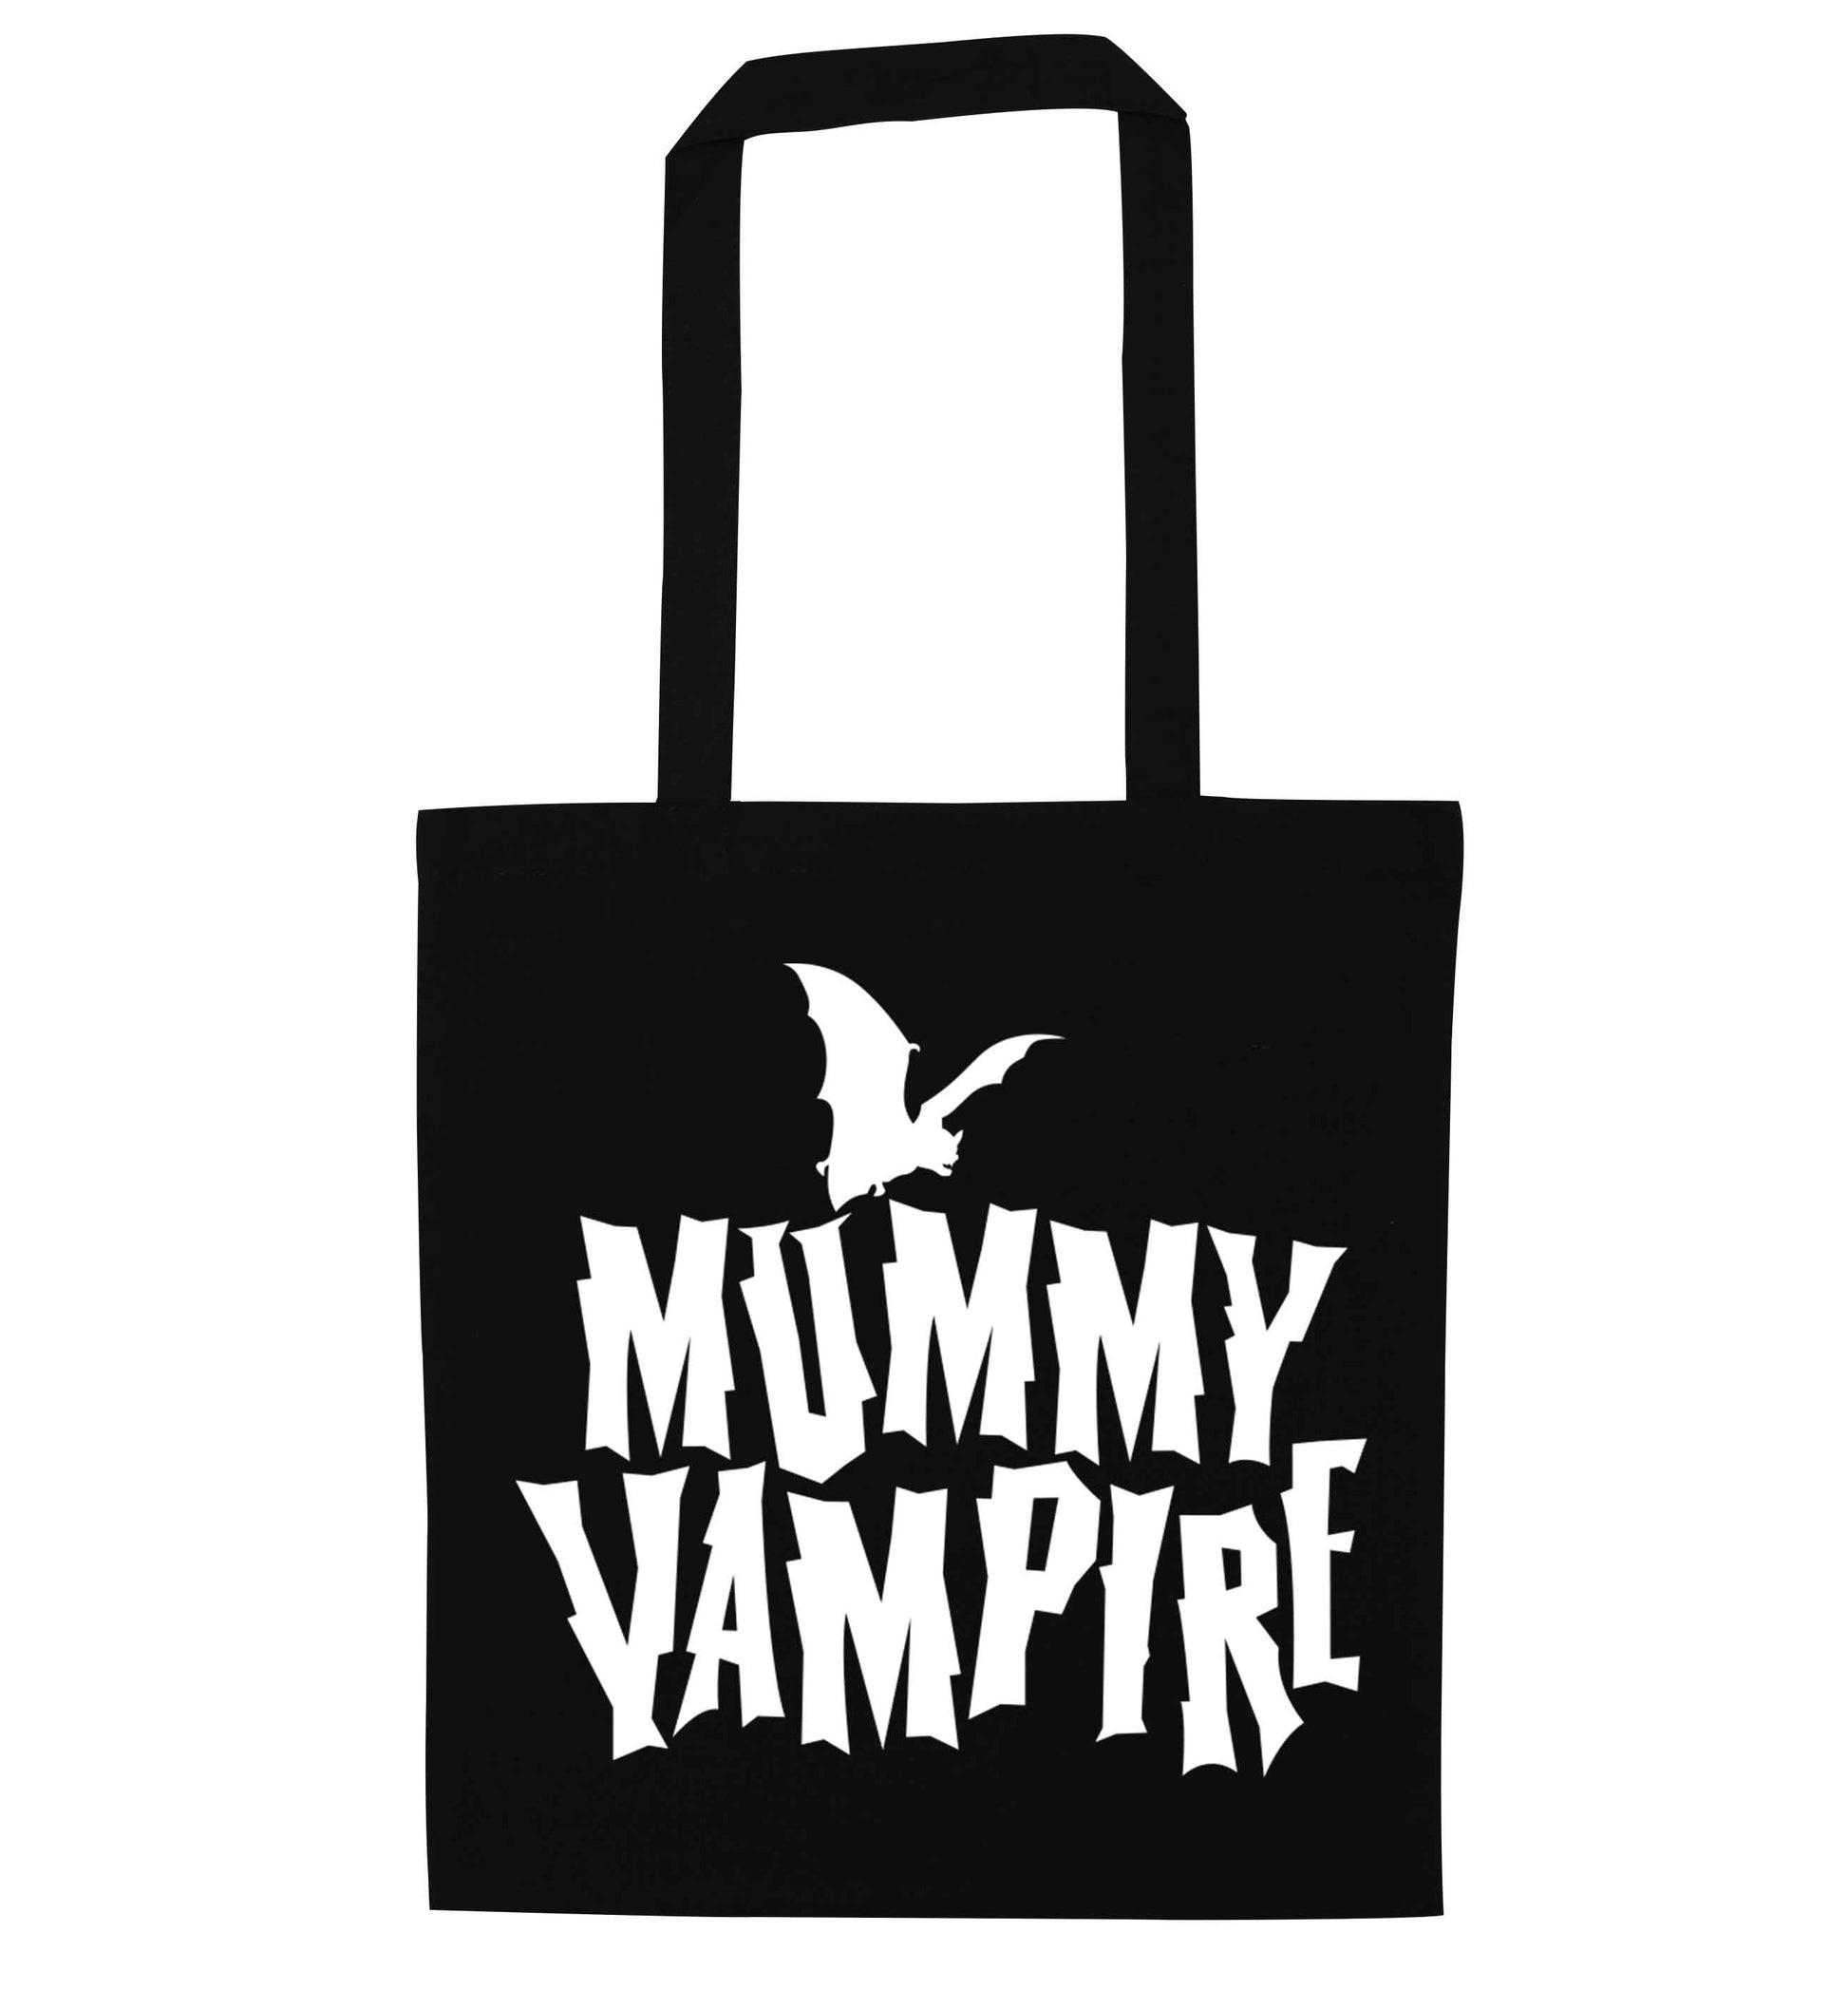 Mummy vampire black tote bag